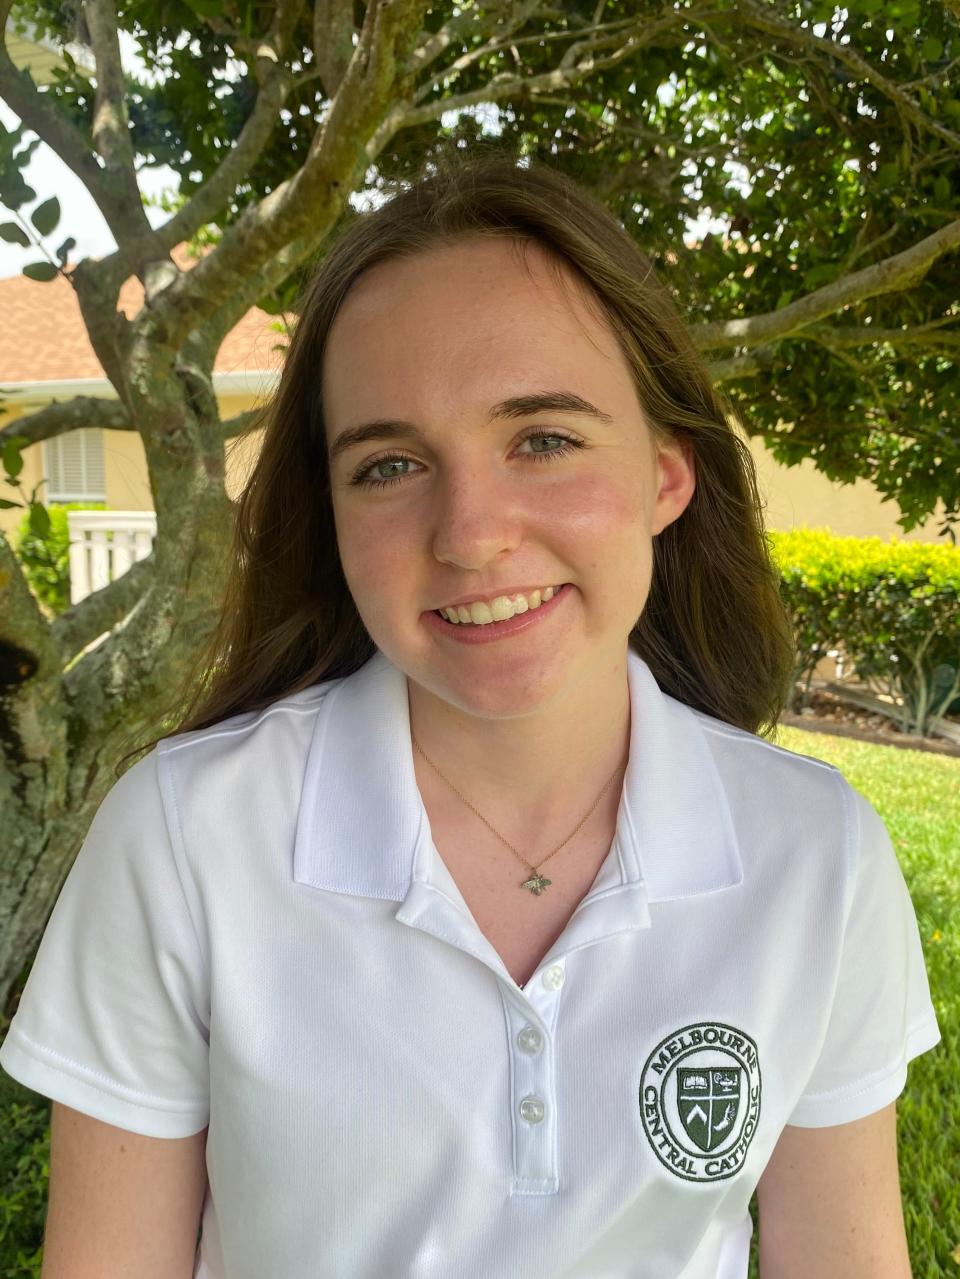 Megan Tierney, Melbourne Central Catholic 2023 Top Scholar